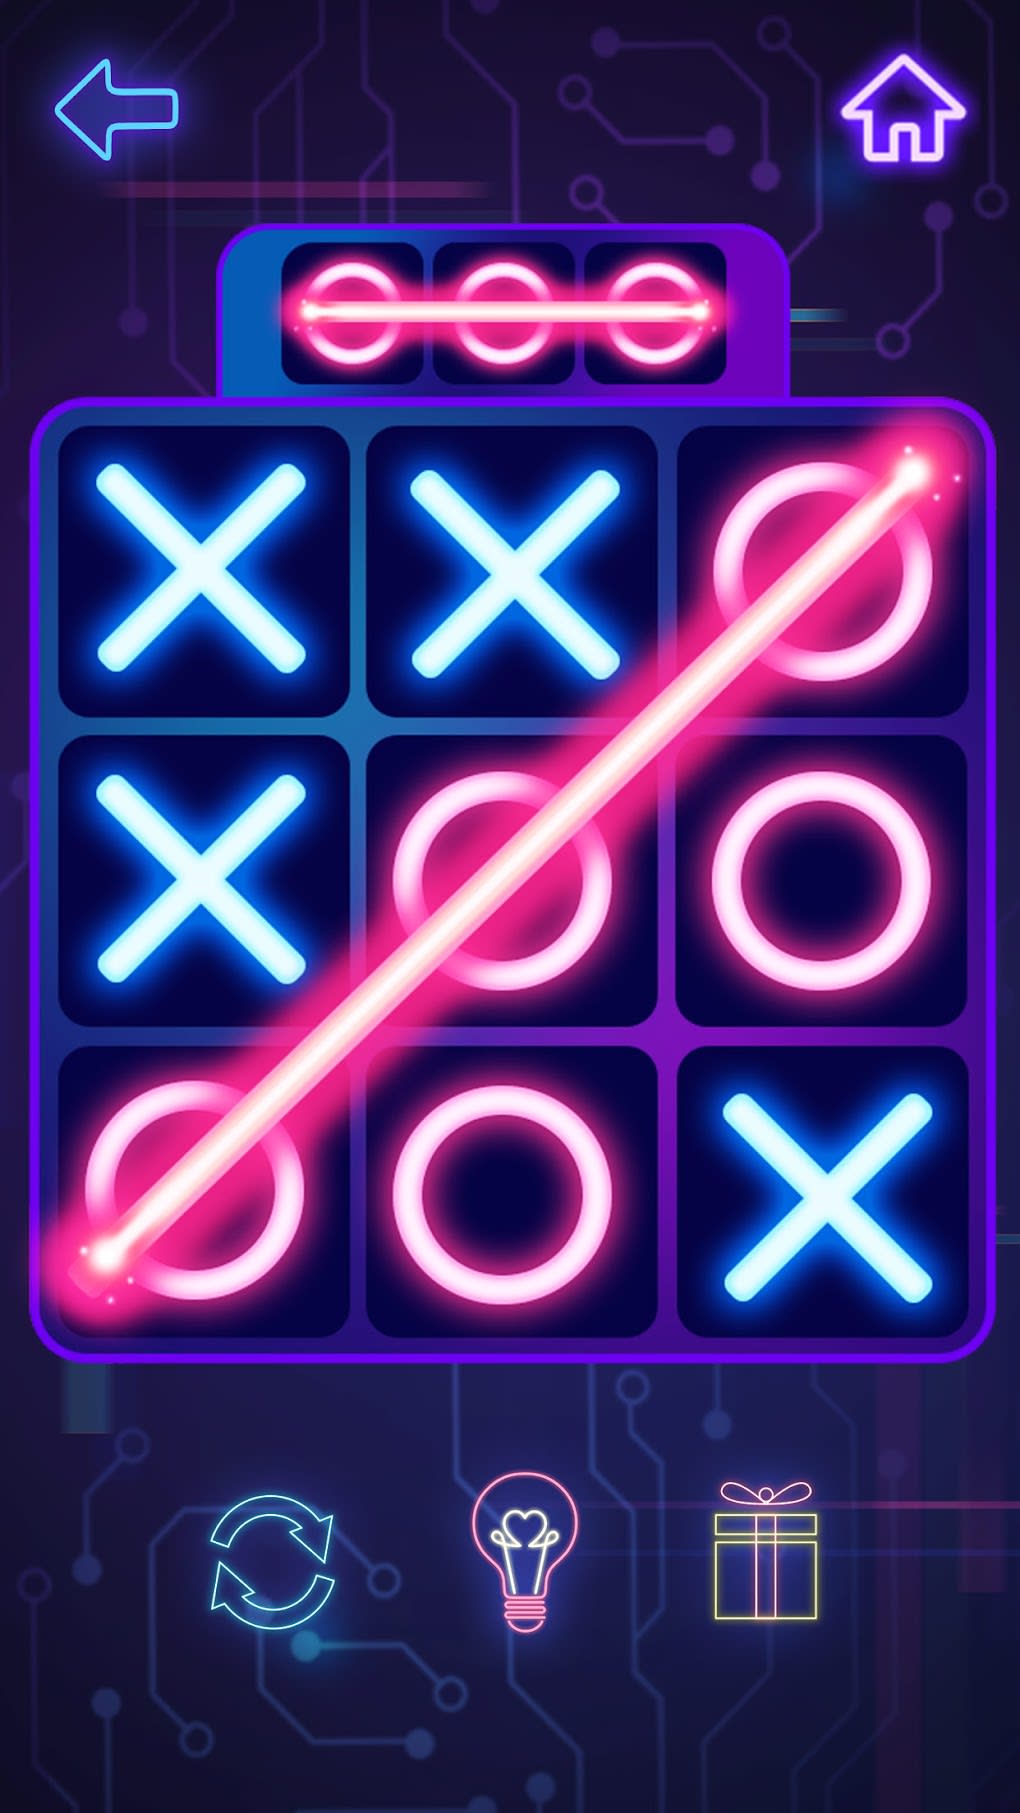 Tic Tac Toe 2 Player: XO Glow para iPhone - Download